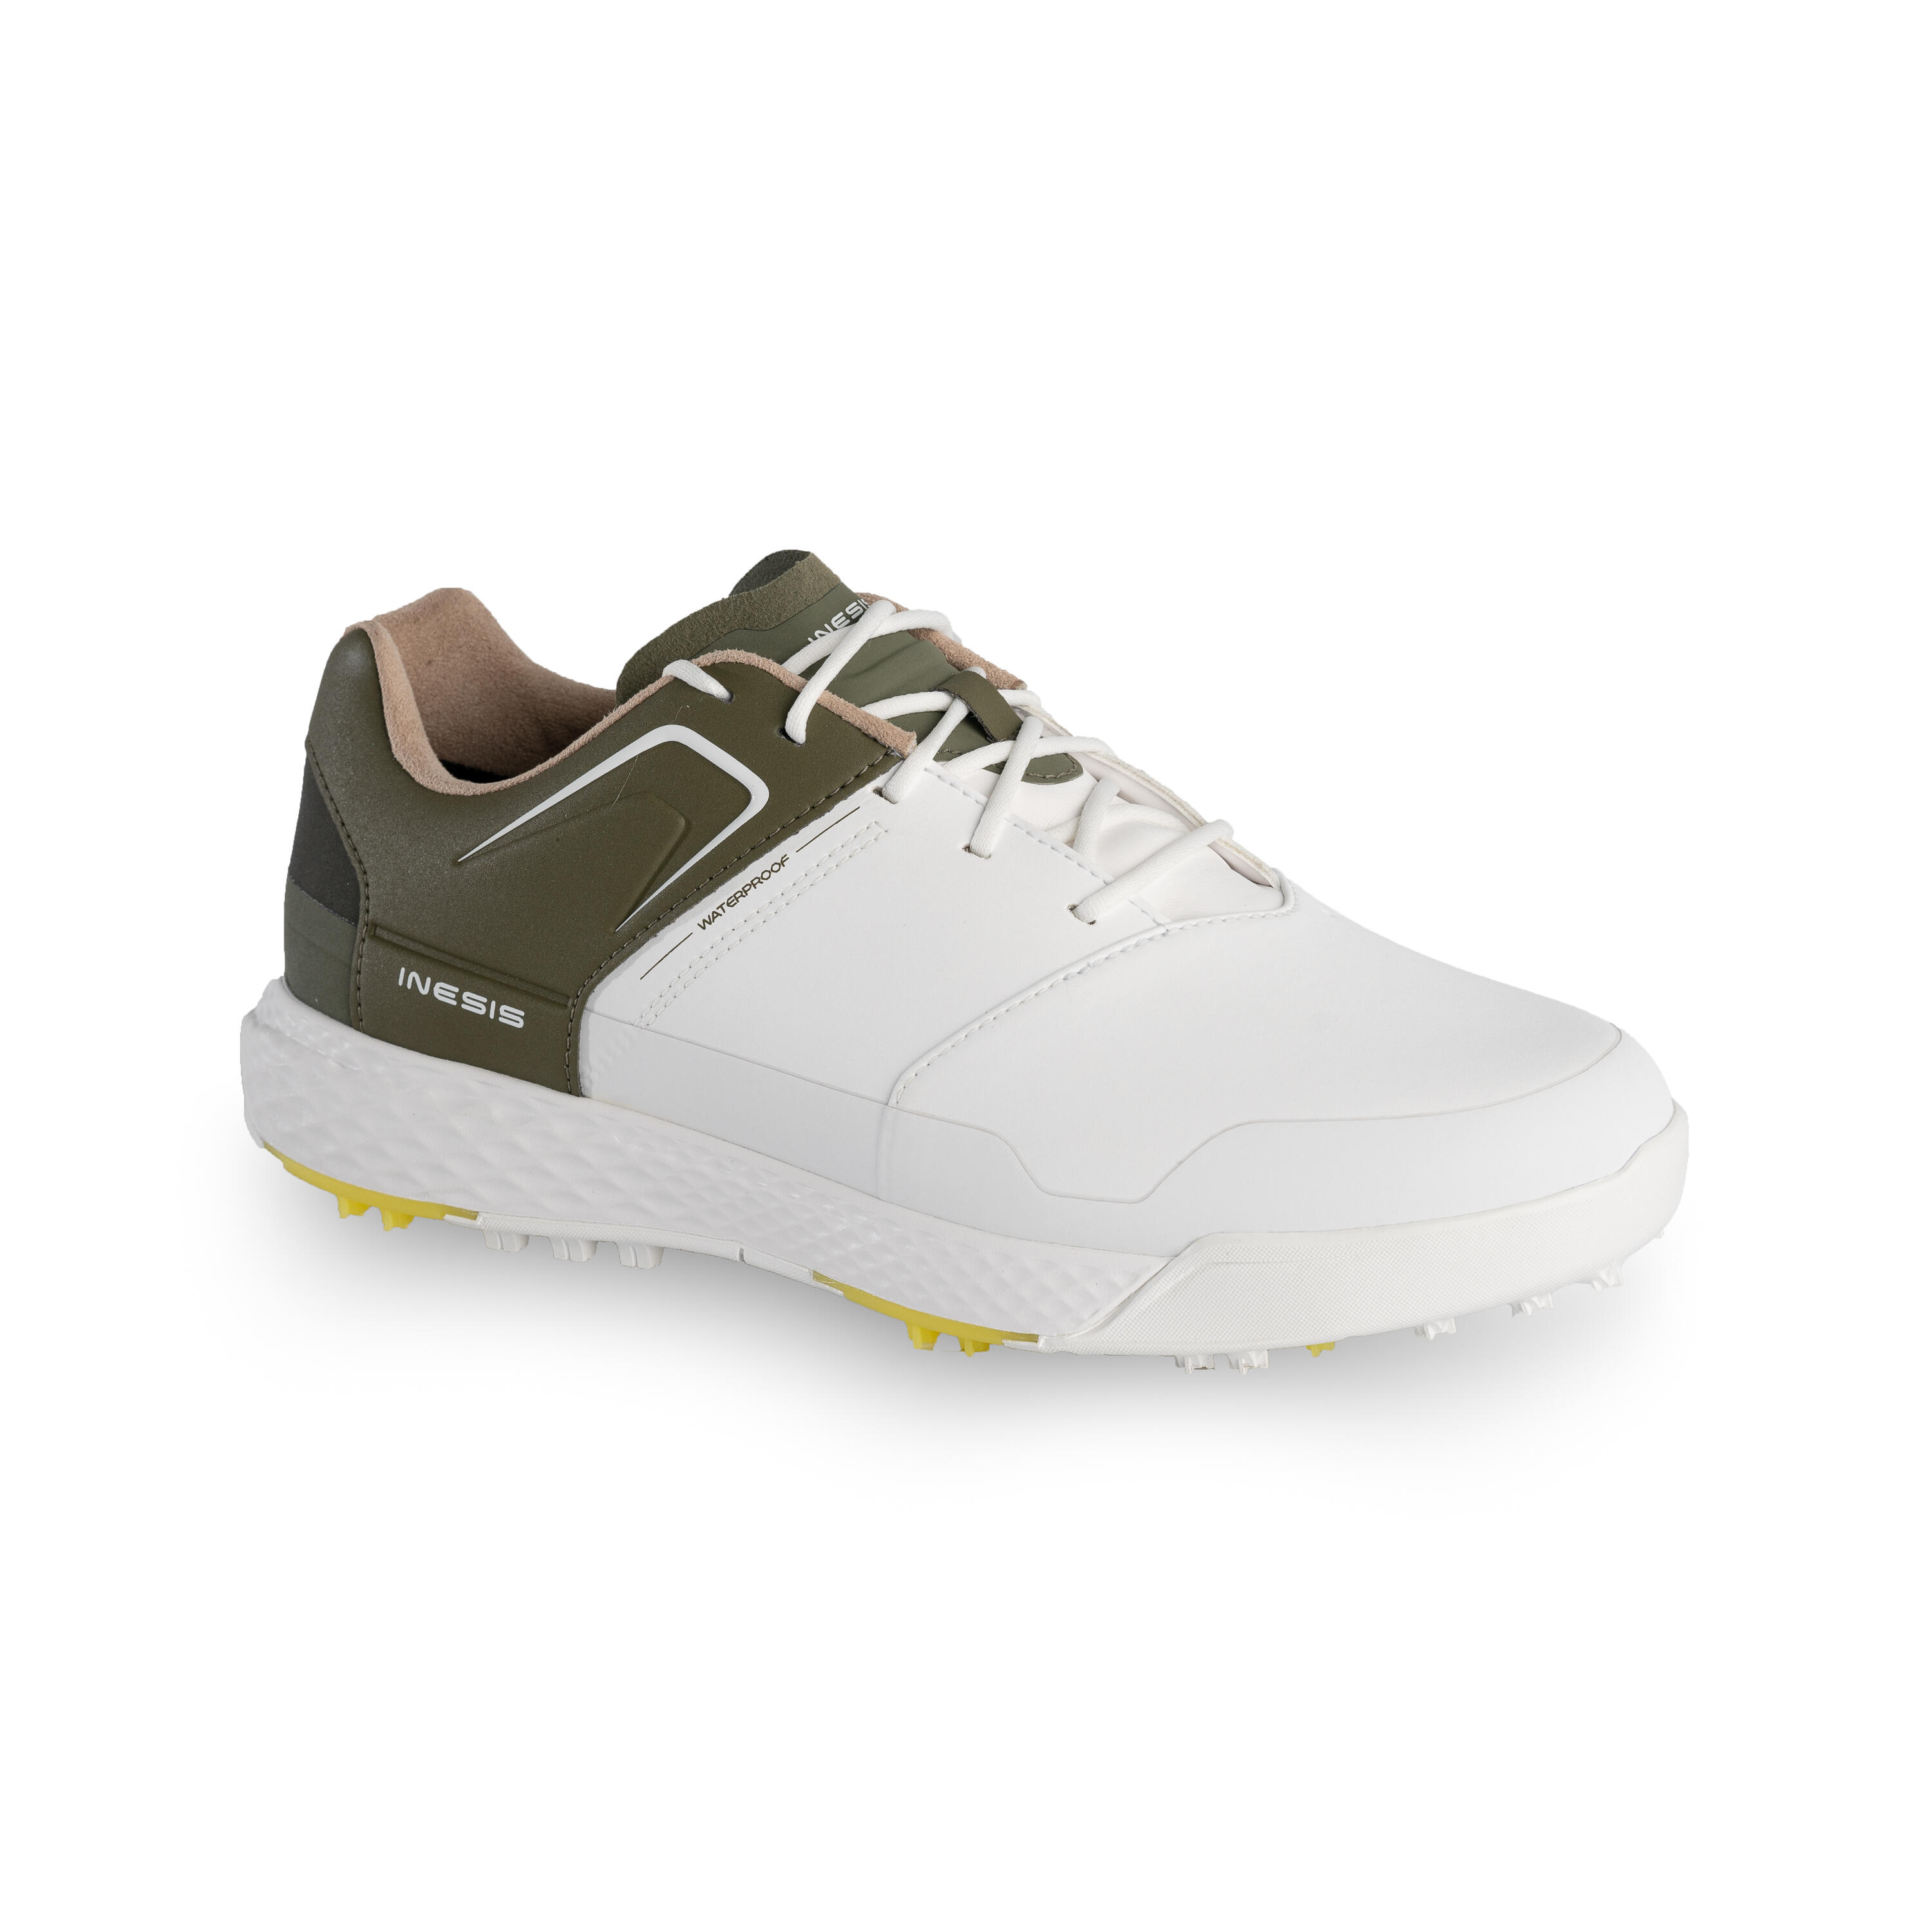 INESIS Men’s golf waterproof grip shoes - white and khaki